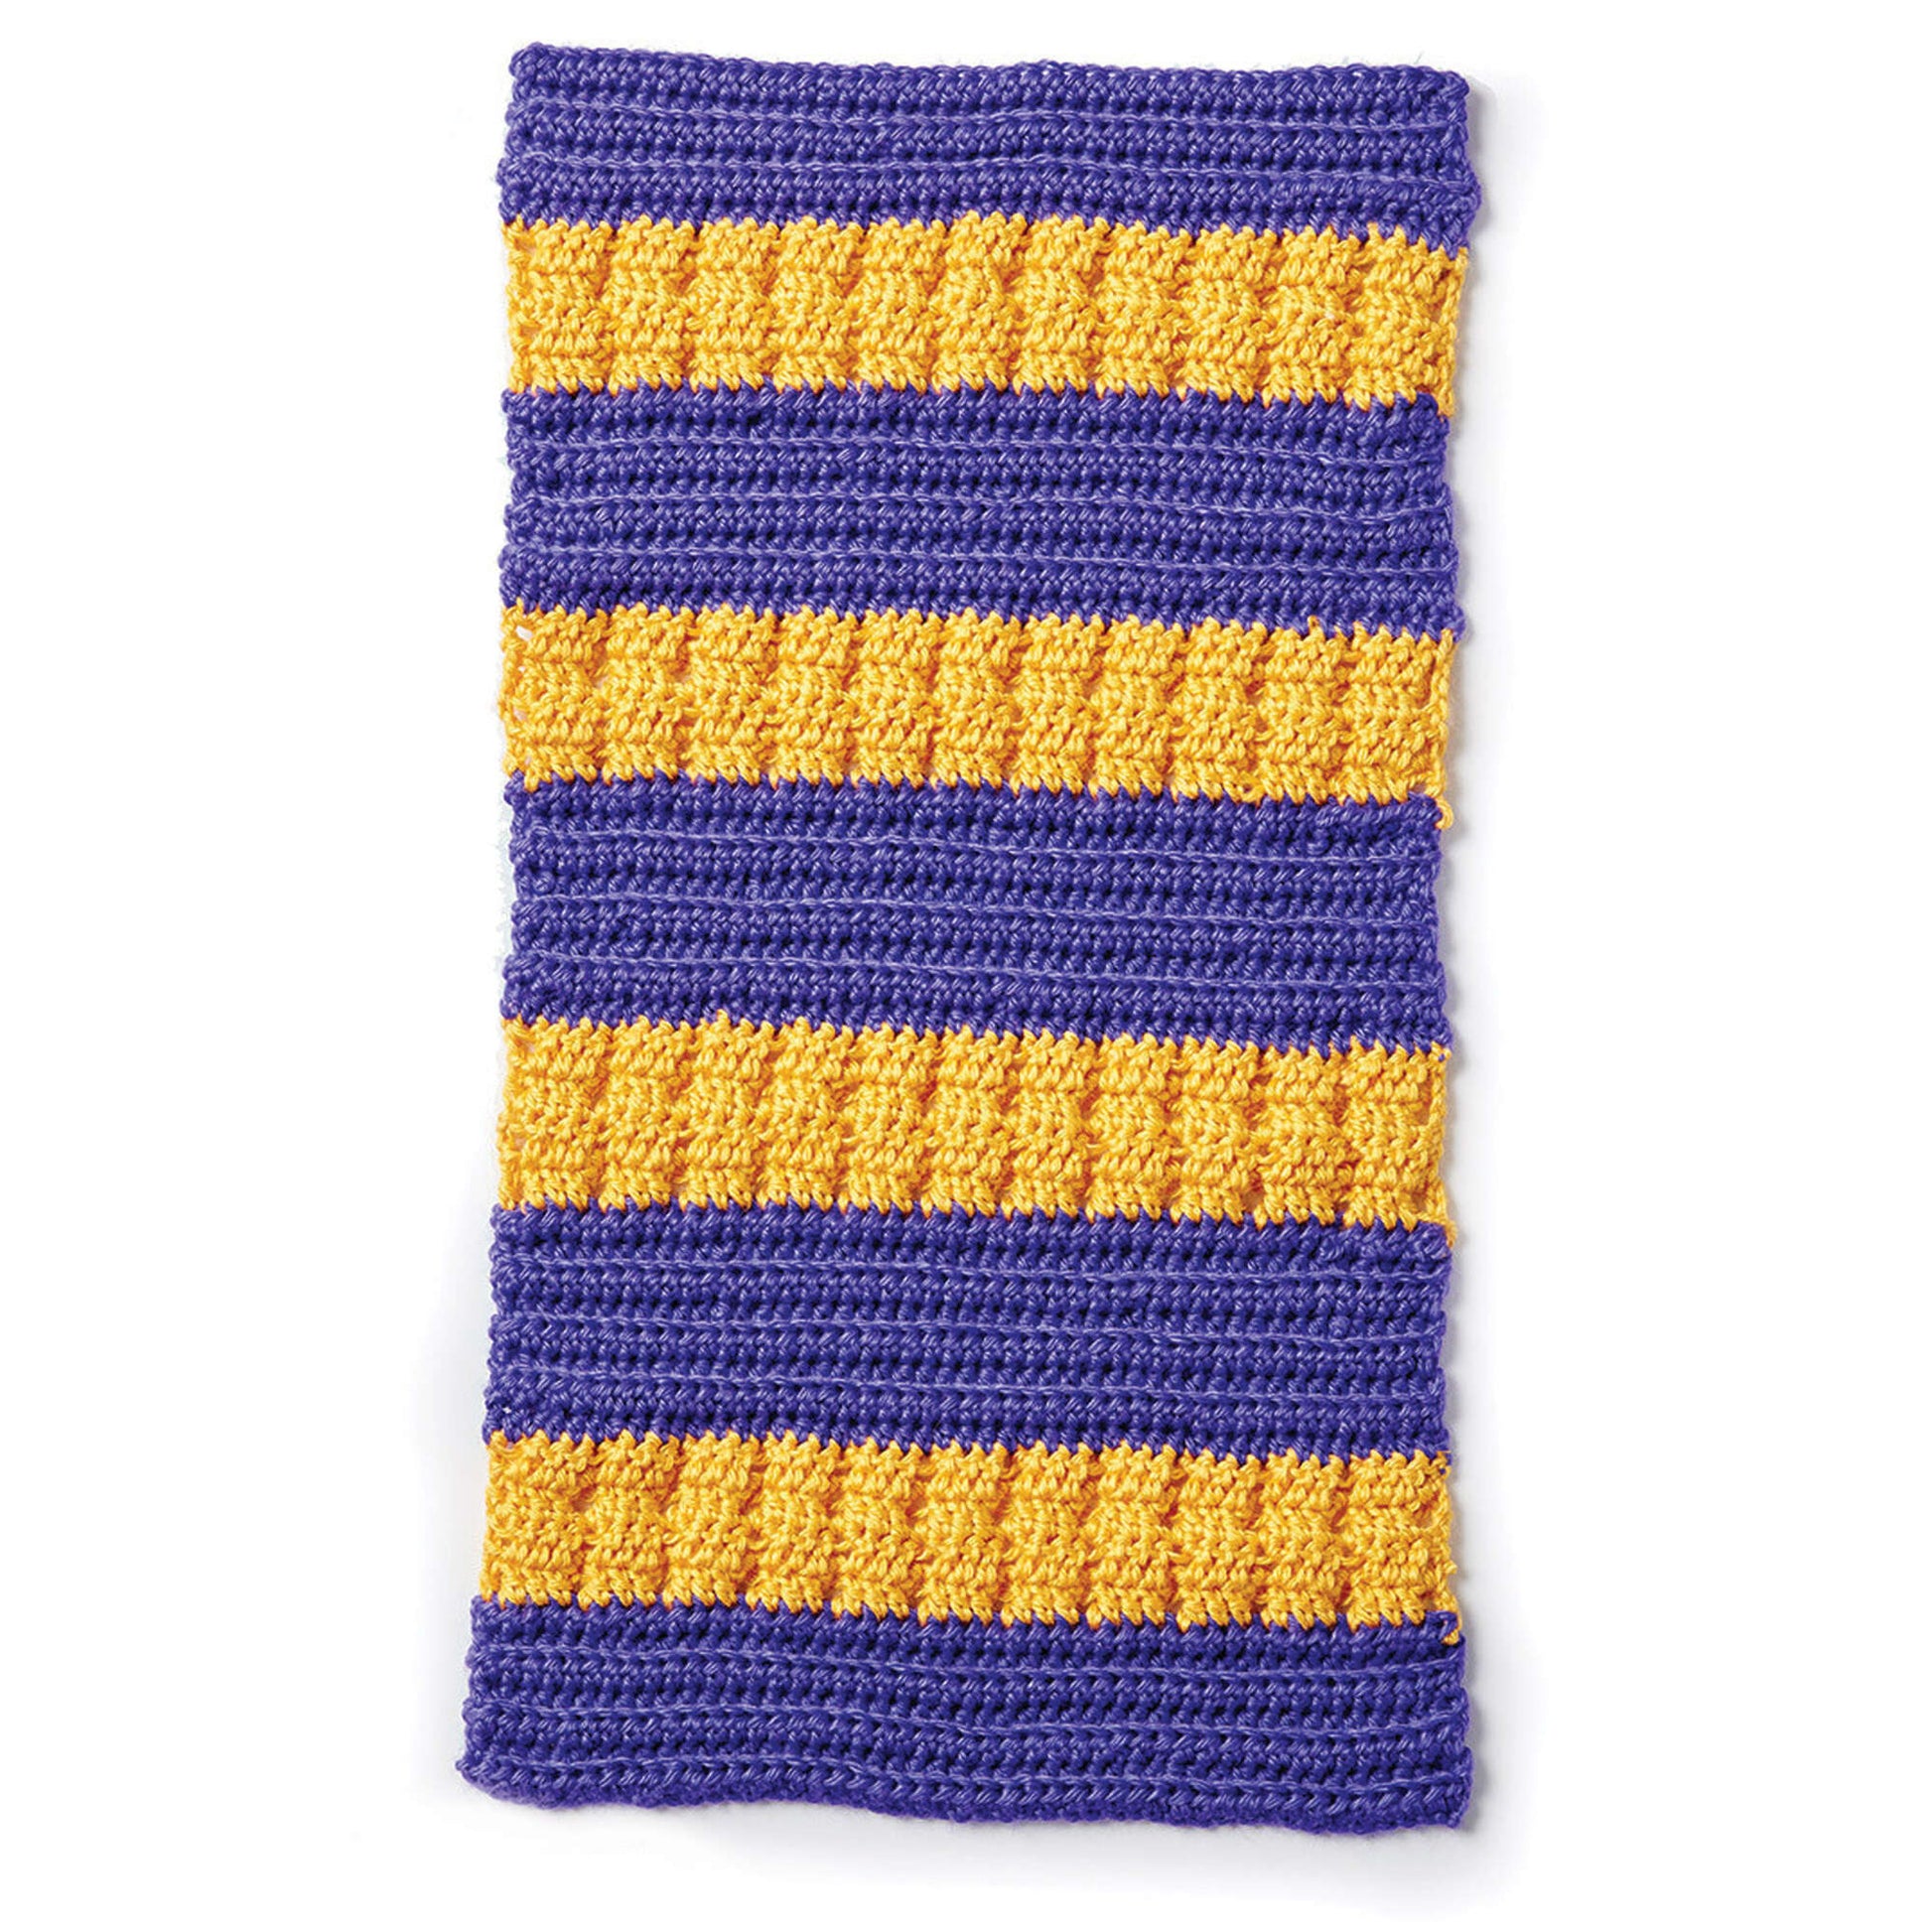 Free Caron School Colors Crochet Afghan Pattern